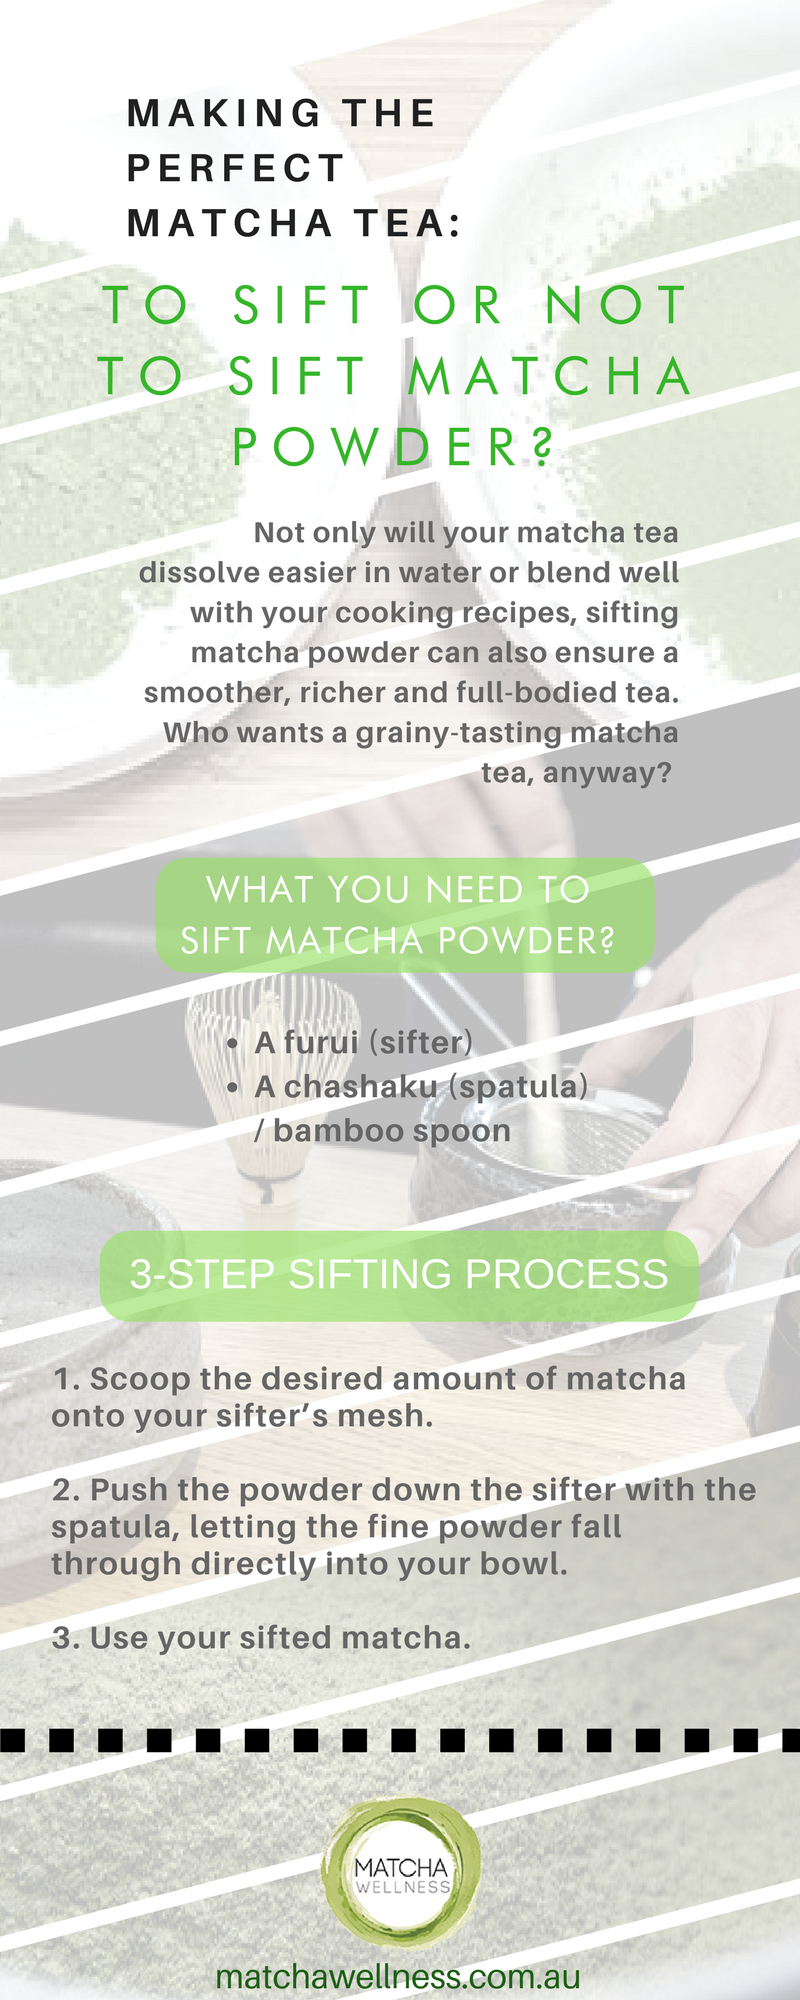 Sift Matcha Powder to Make a Perfect Matcha Tea Infographic